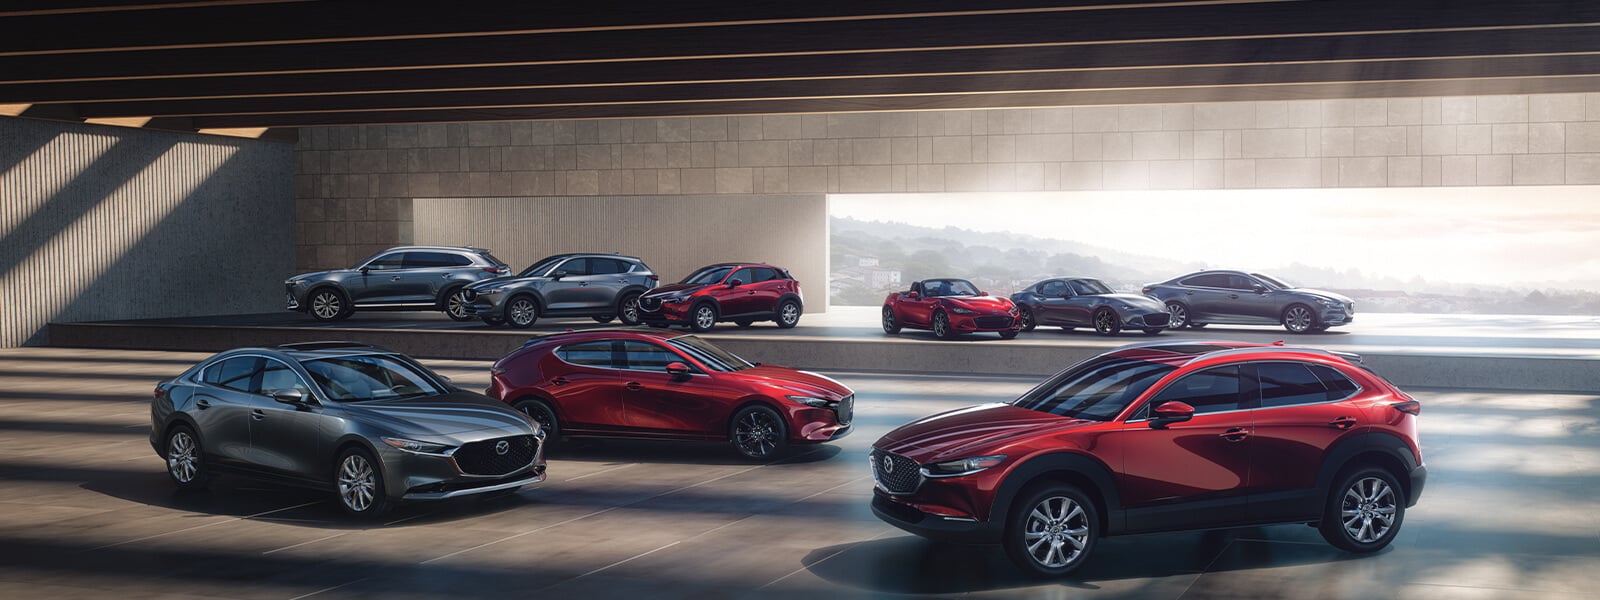 Mazda models on showroom floor featuring the Mazda3 sedan, Mazda6 and the CX-5.